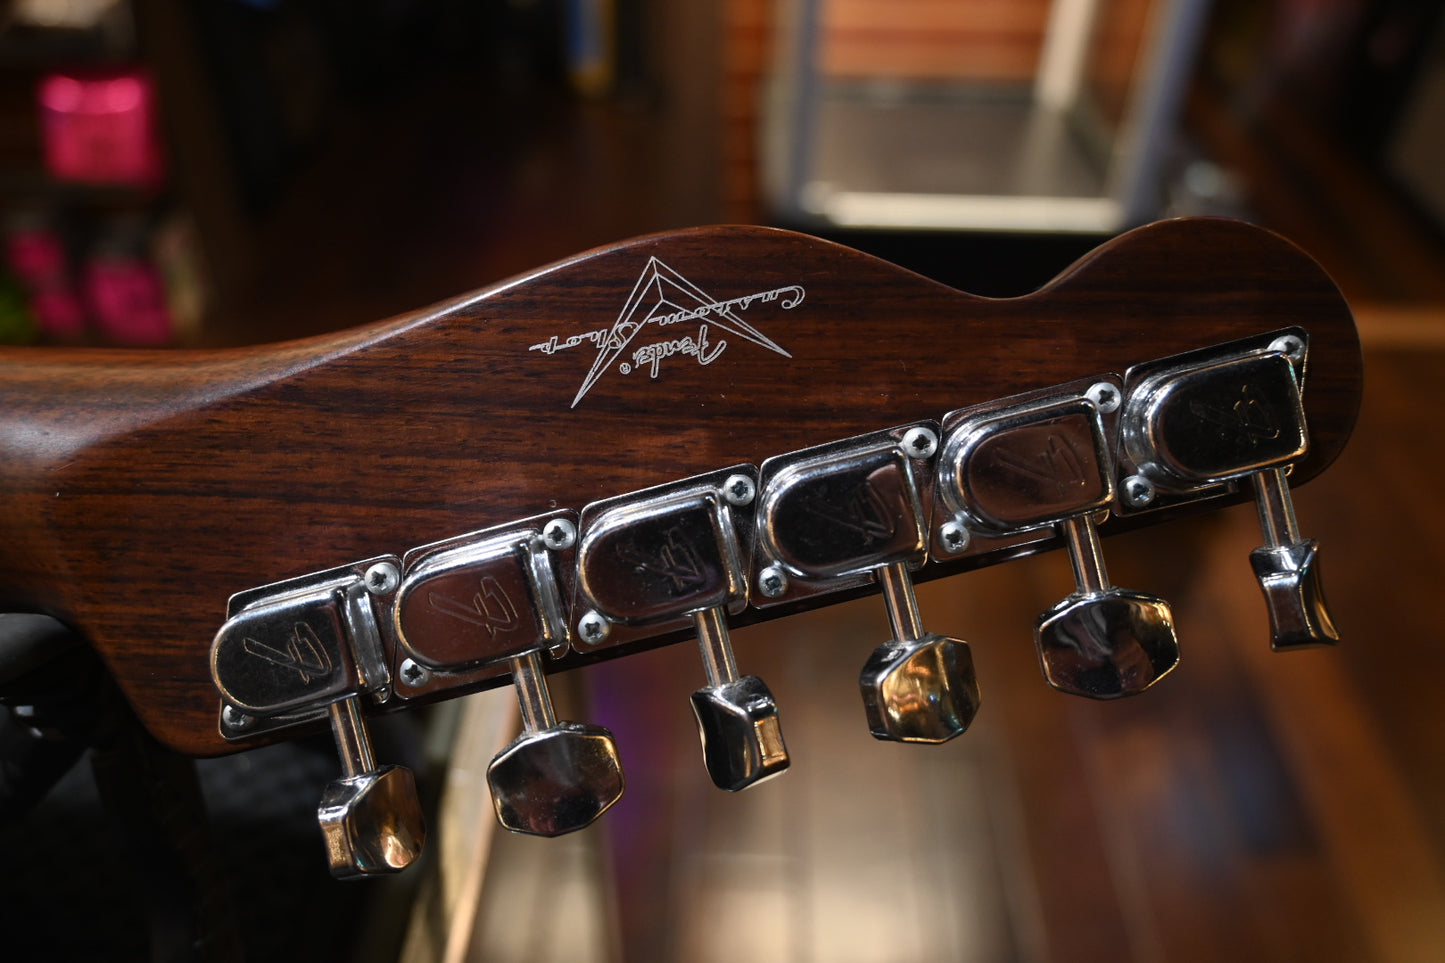 Fender Custom Shop 60’s Rosewood Telecaster CC 2021 - Natural Guitar #1552 PRE-OWNED - Danville Music